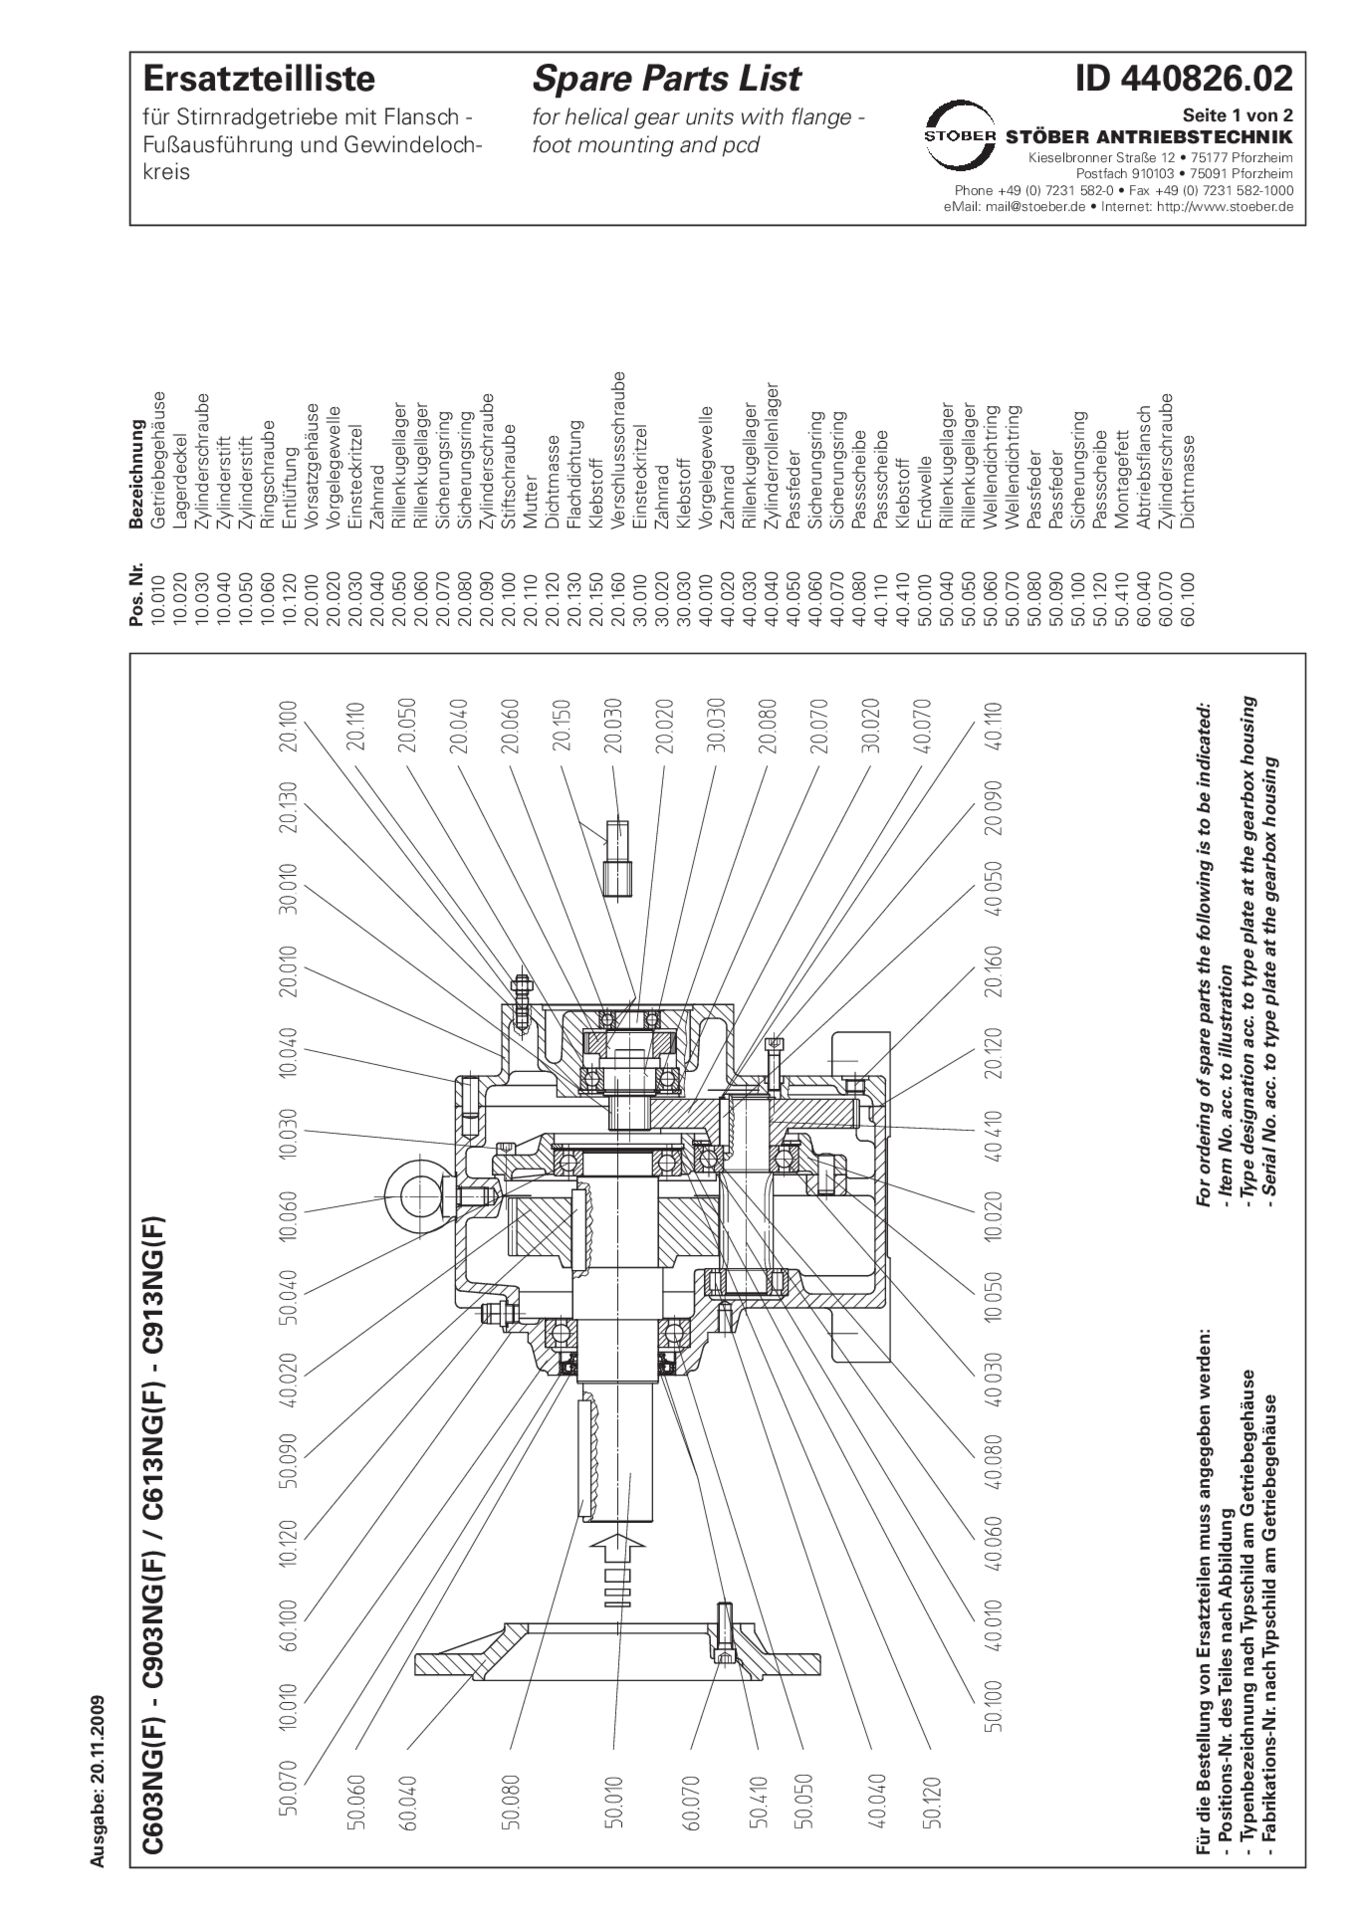 Replacement parts list helical gear units C603 C613 C703 C713 C803 C813 C903 C913 NG NF